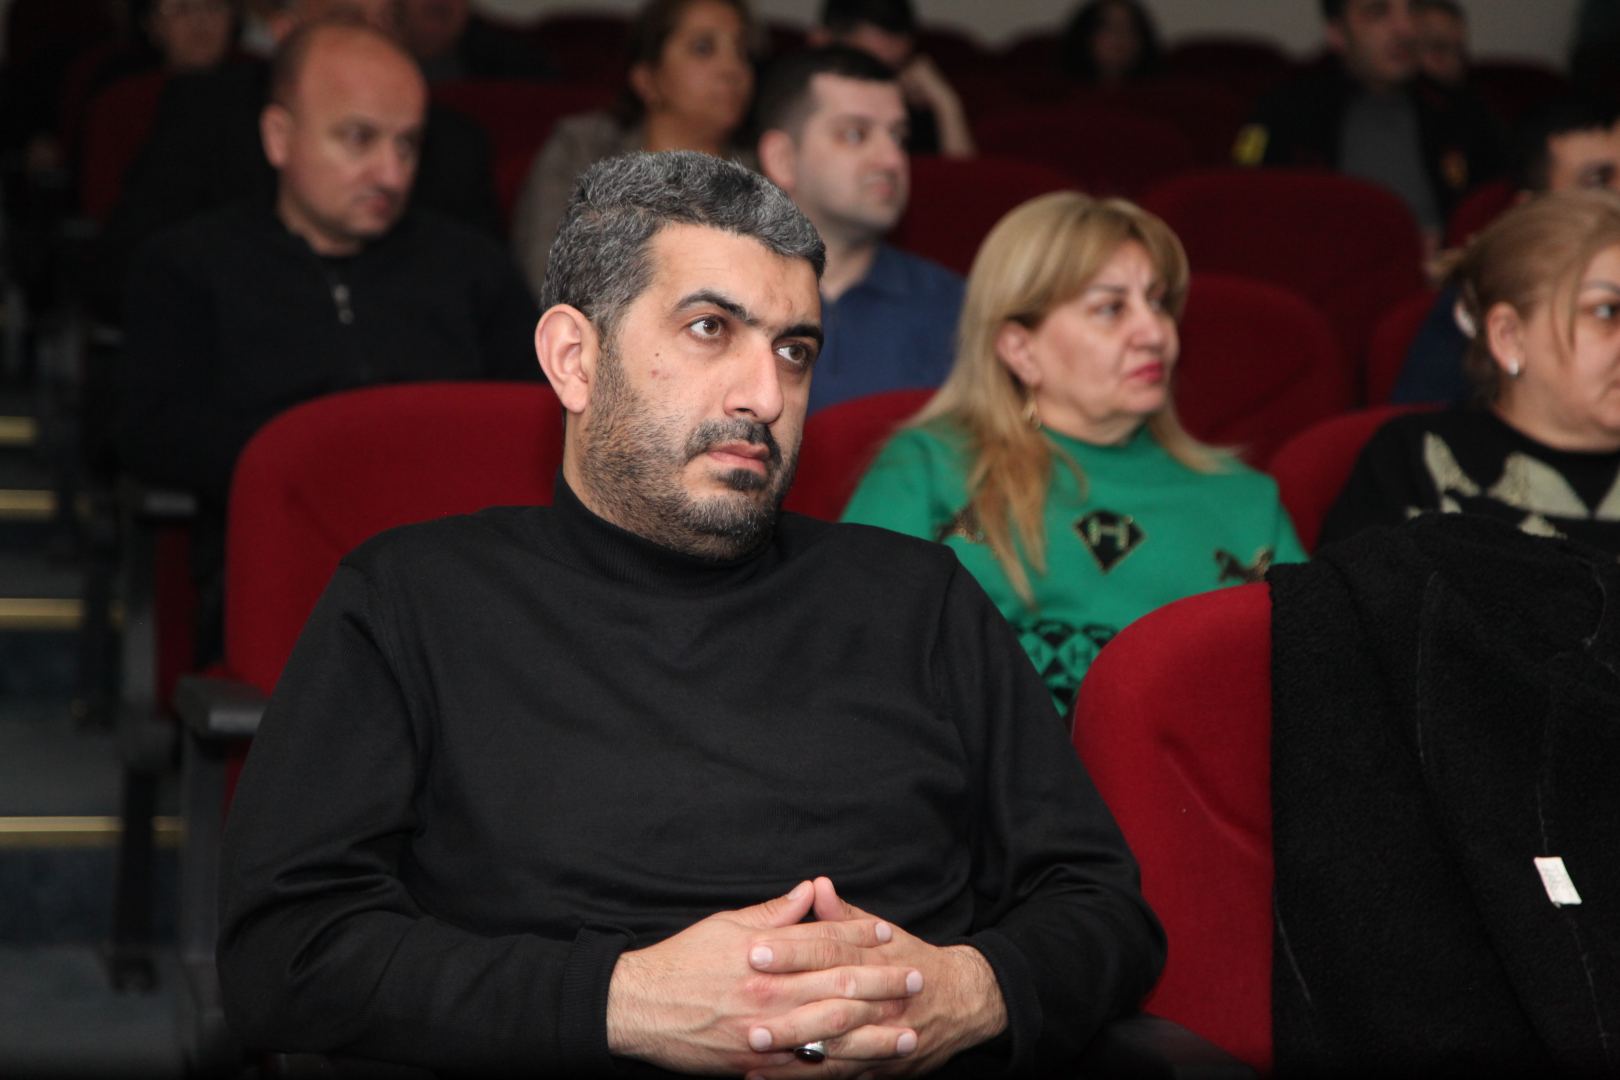 "Символ памяти" – в Баку показали фильм Алекпера Мурадова (ФОТО)